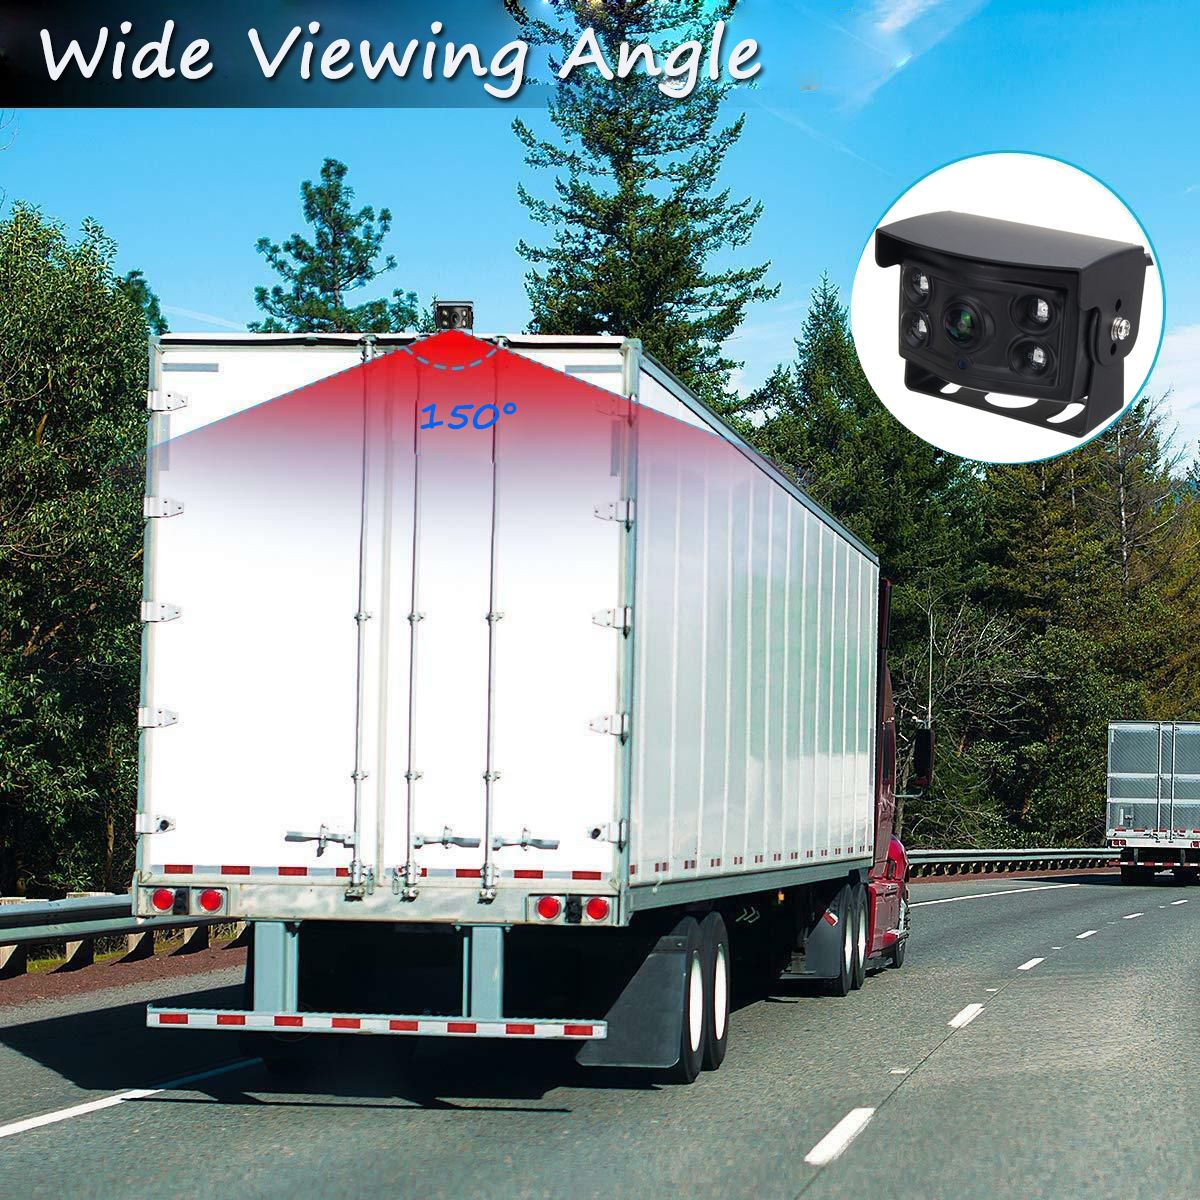 4-Pin-CCD-150deg-4-LED-Night-Vision-Waterproof-Car-Rear-View-Camera-For-Truck-1418876